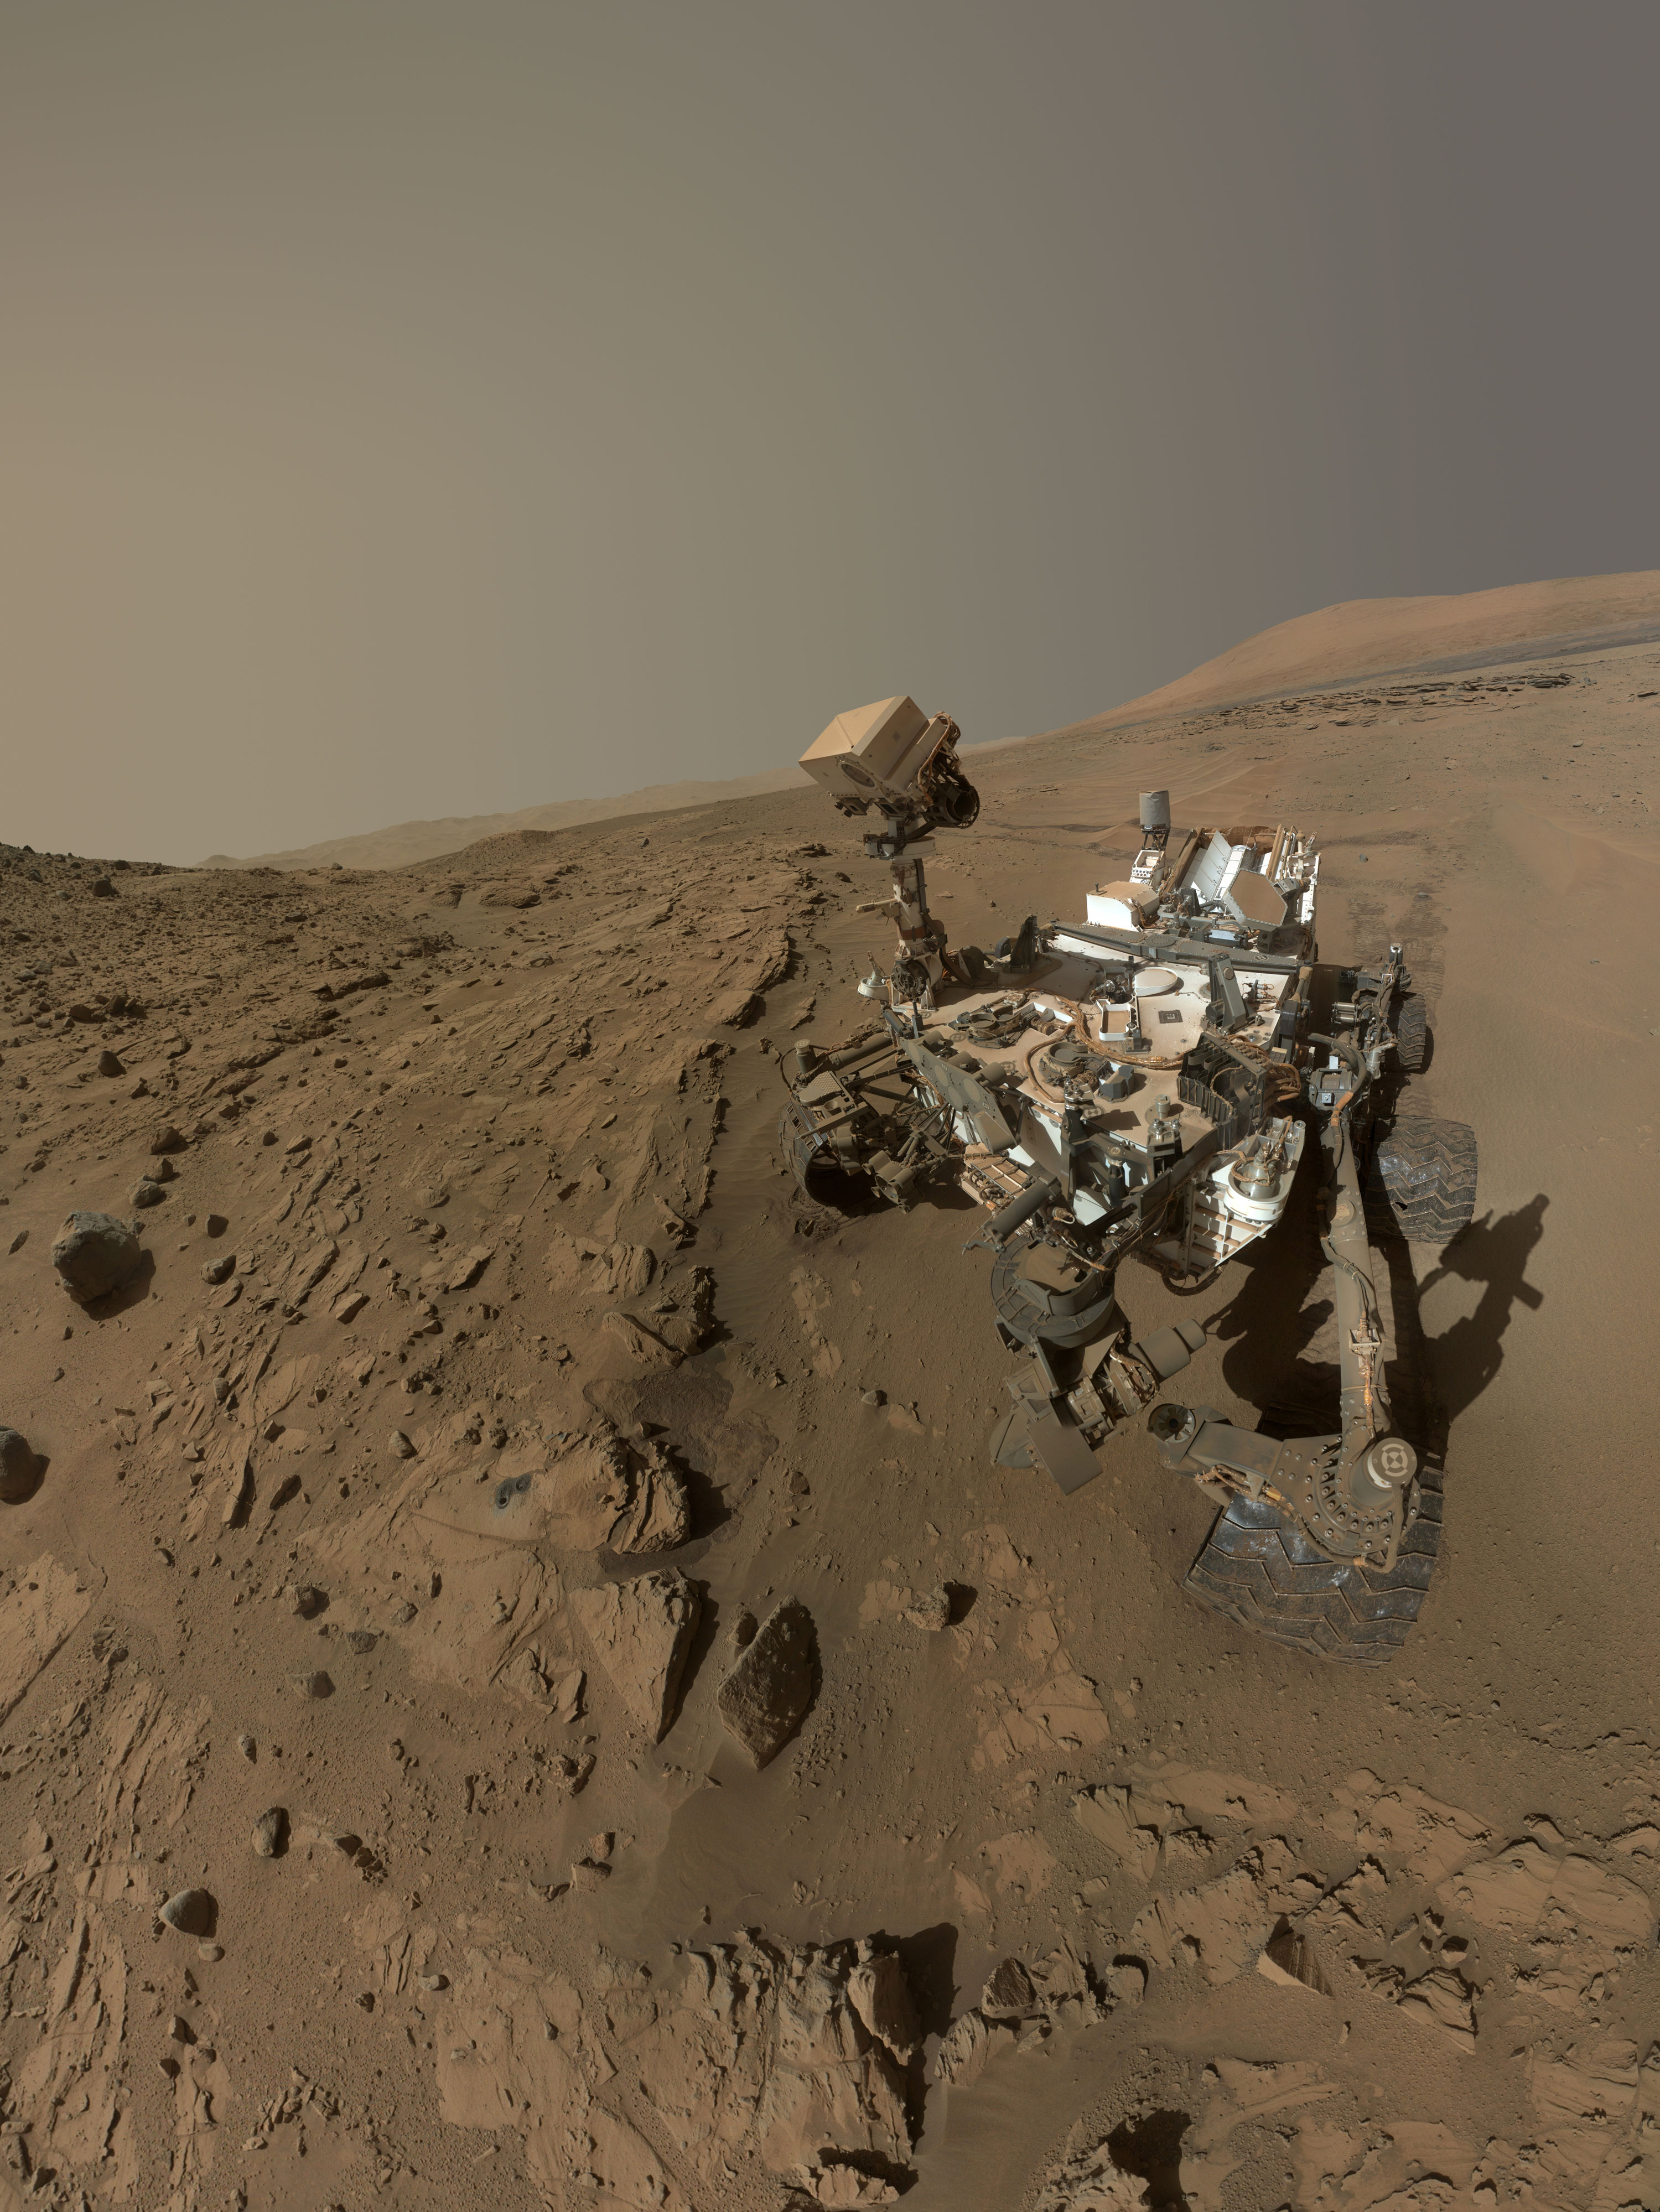 Abundant Oxygen in Early Mars' Atmosphere?